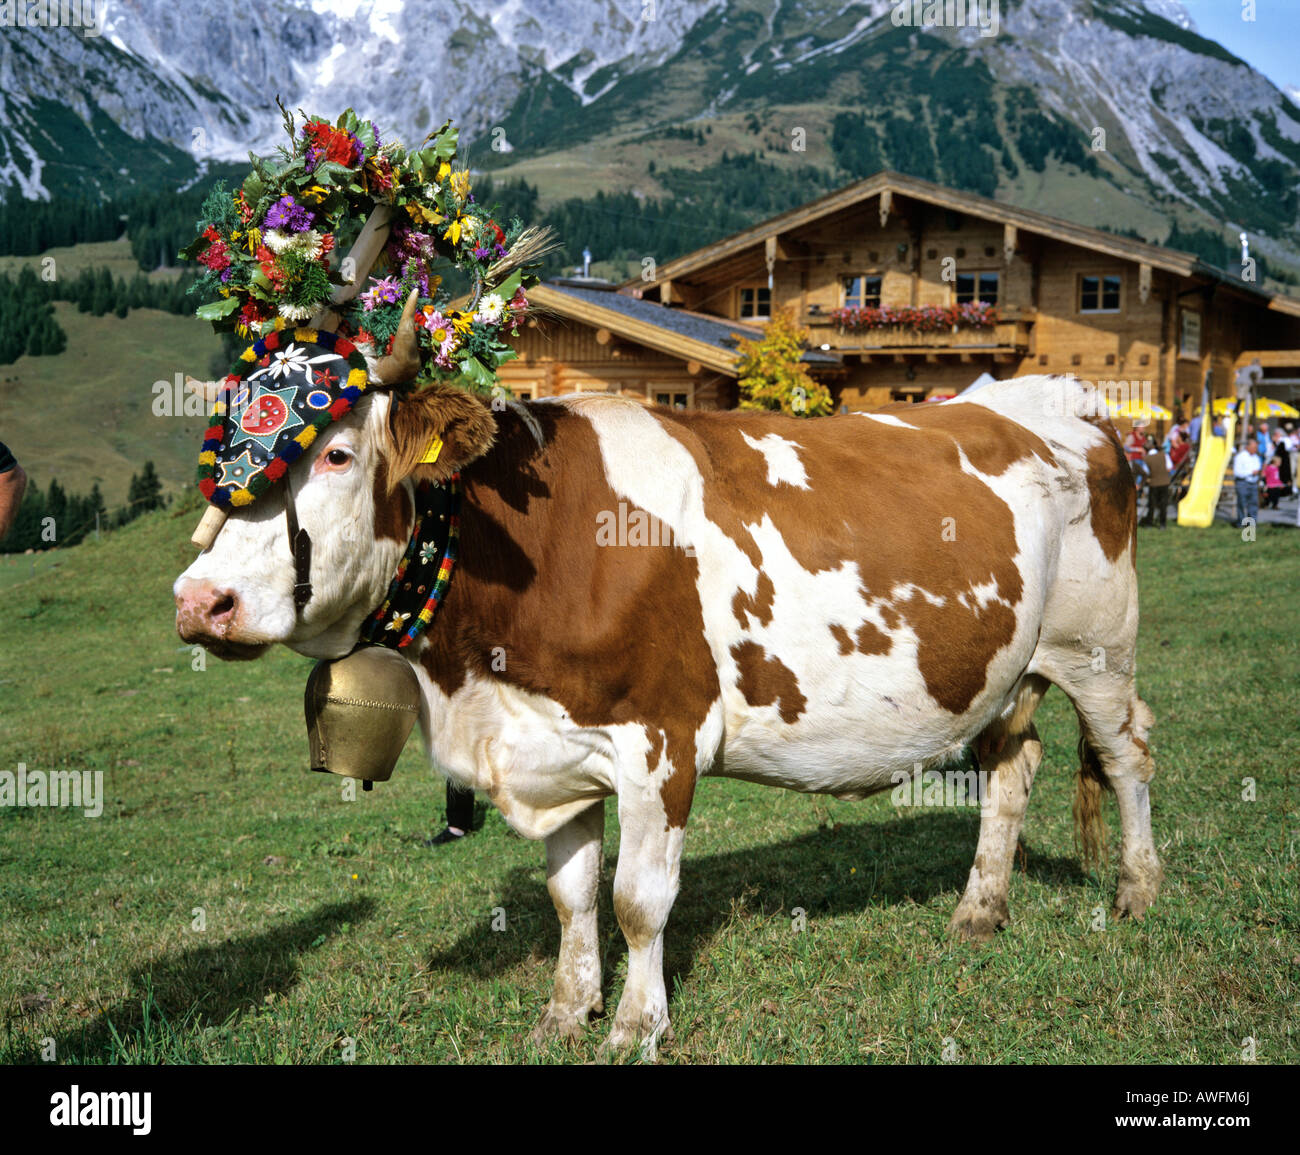 Alpine vacas decoradas según la costumbre, Austria, Europa Foto de stock